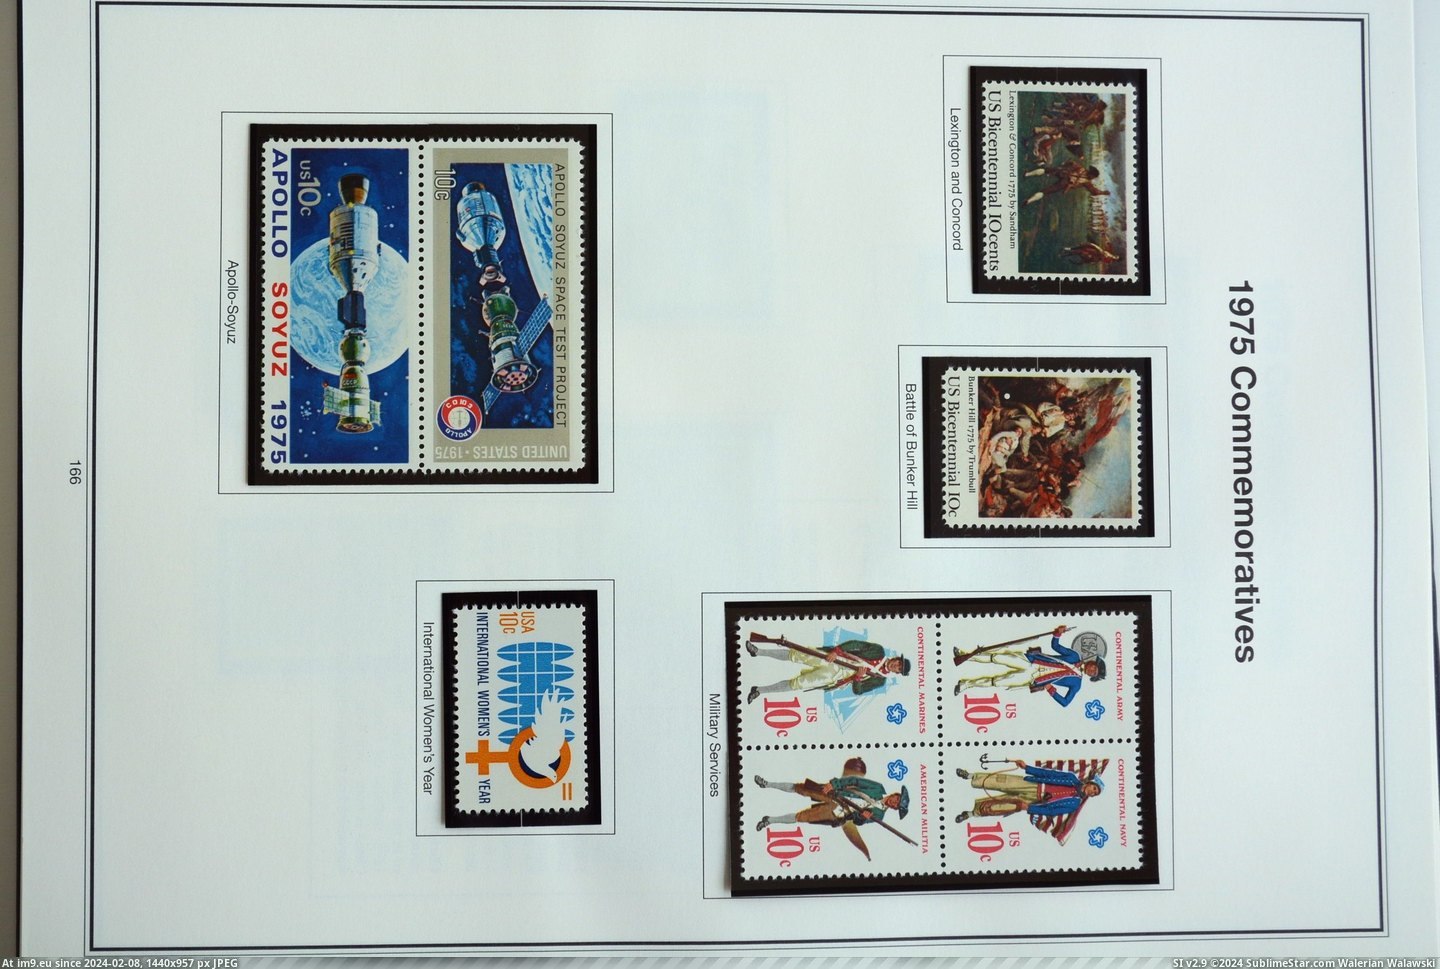  #Dsc  DSC_0878 Pic. (Image of album Stamp Covers))